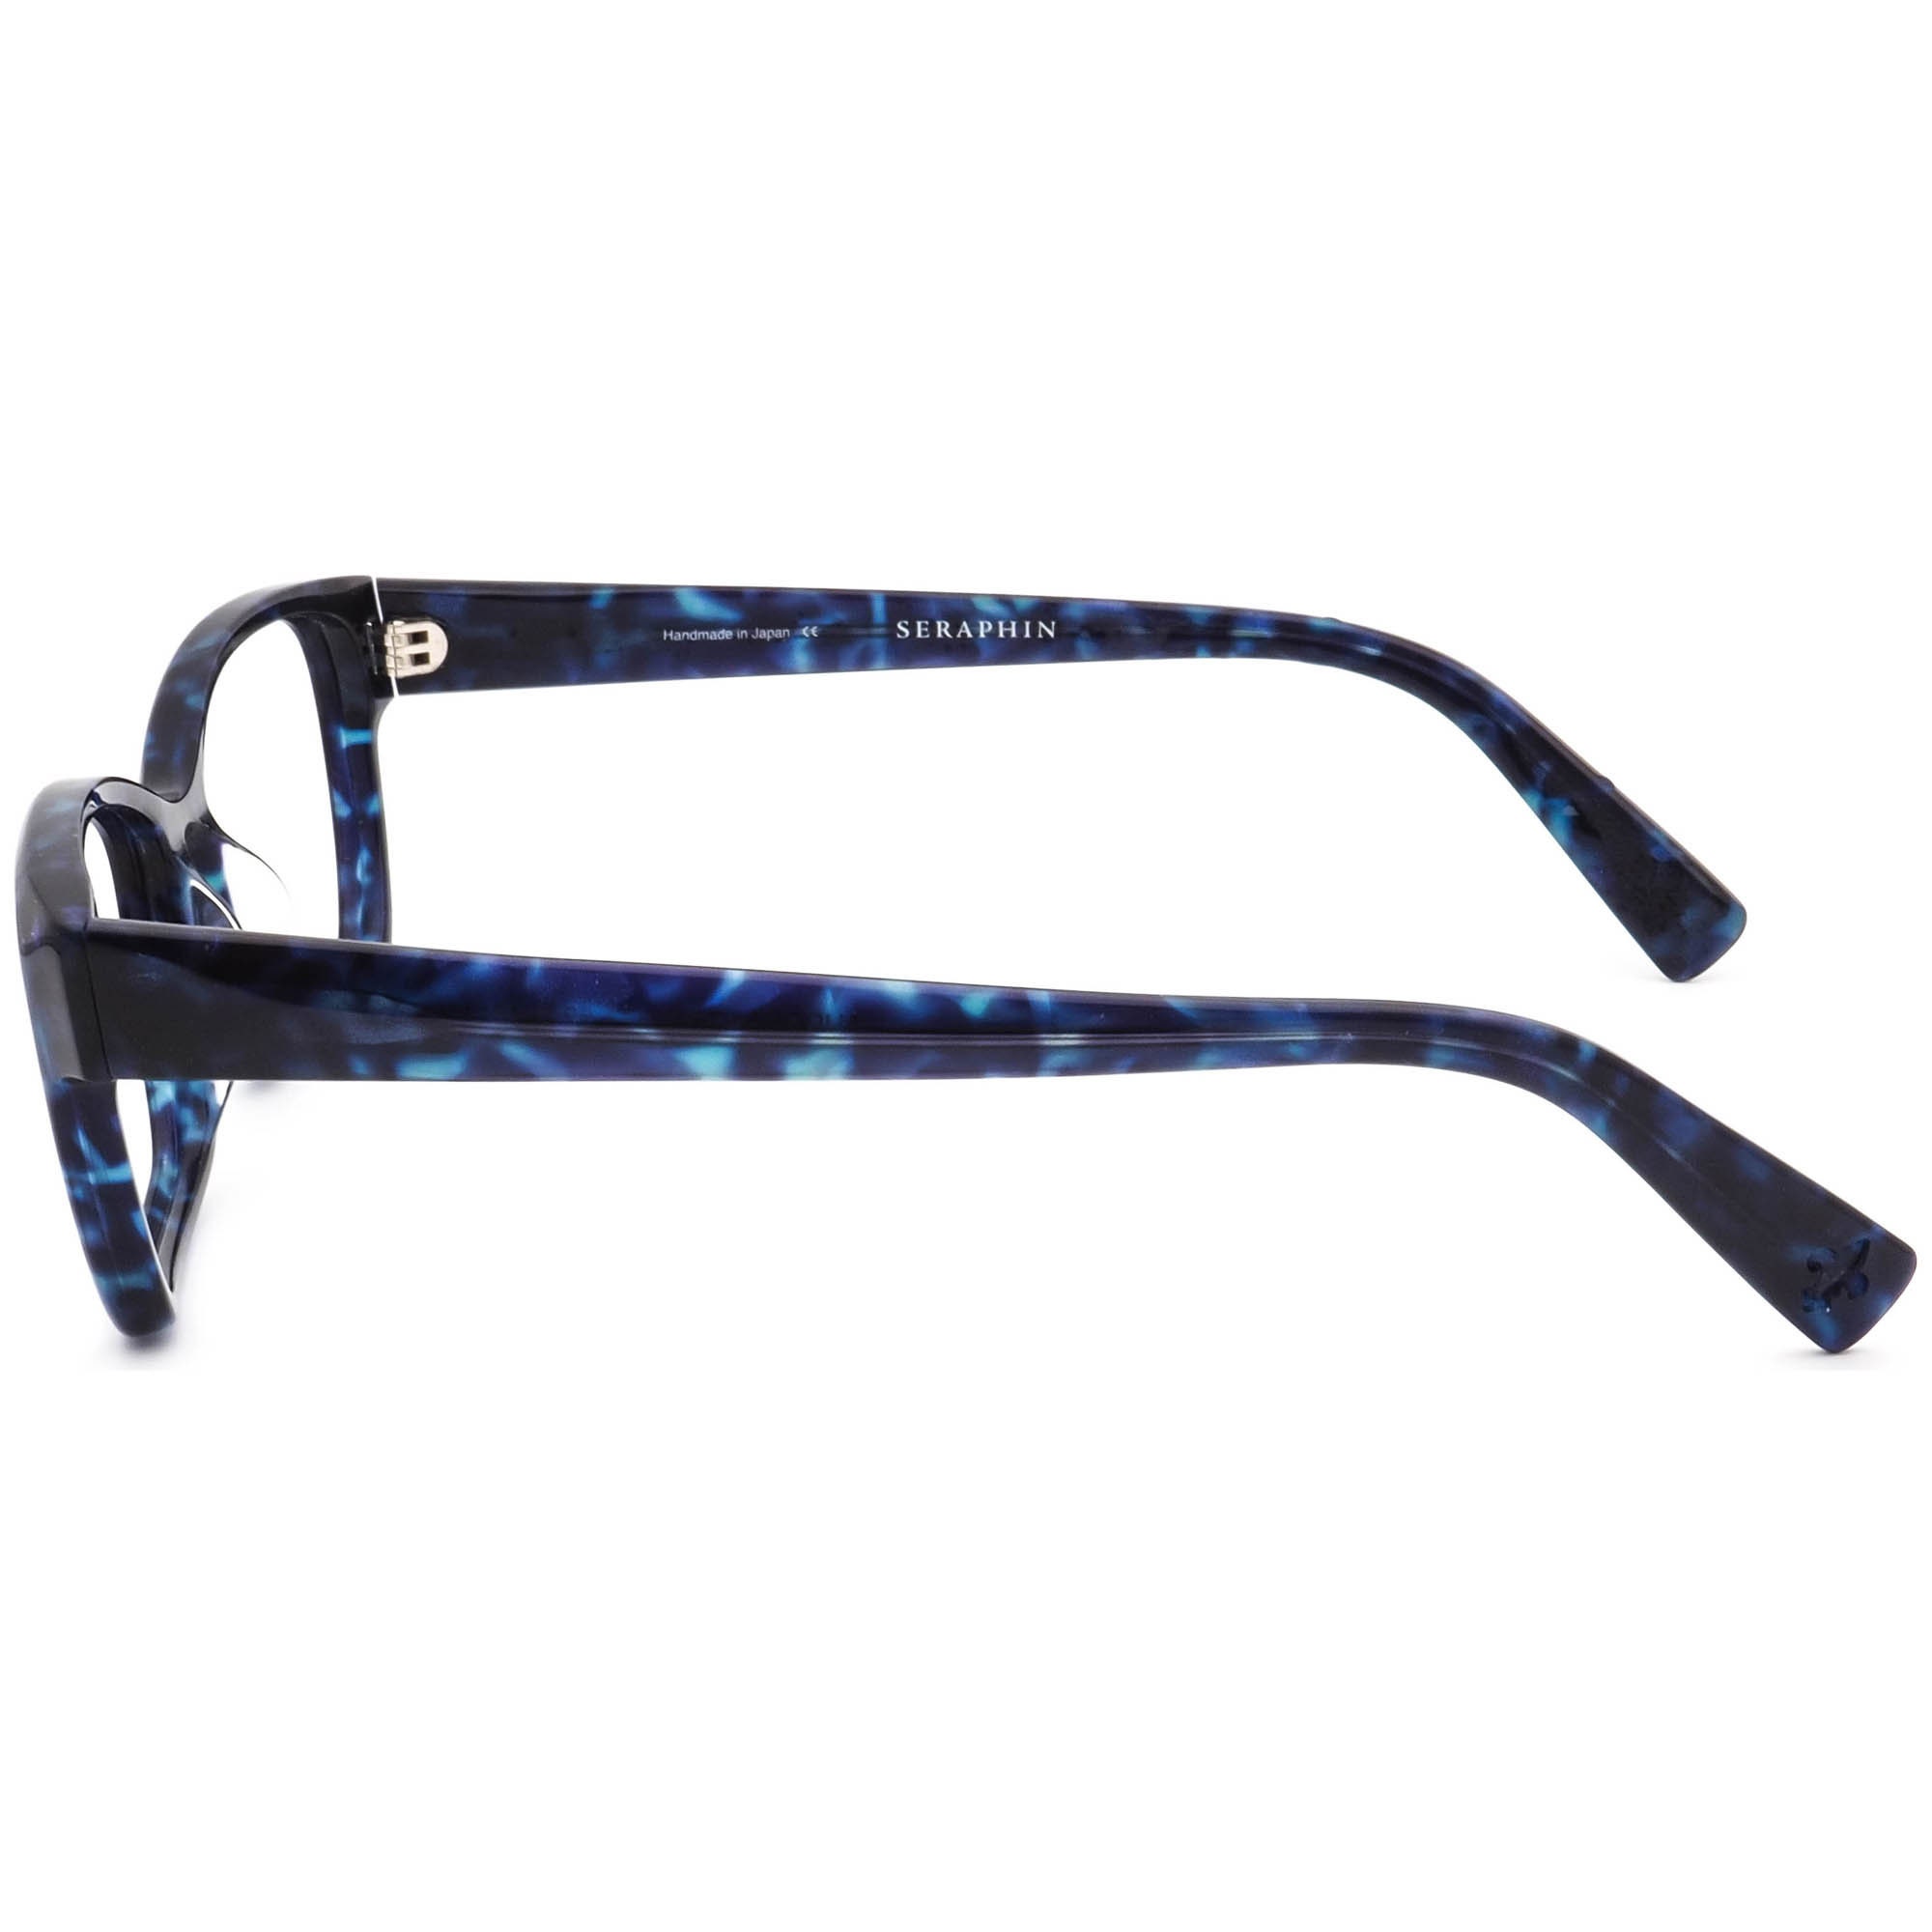 Seraphin Shimmer Shimmer Sun 3 Sunglasses | FREE Shipping